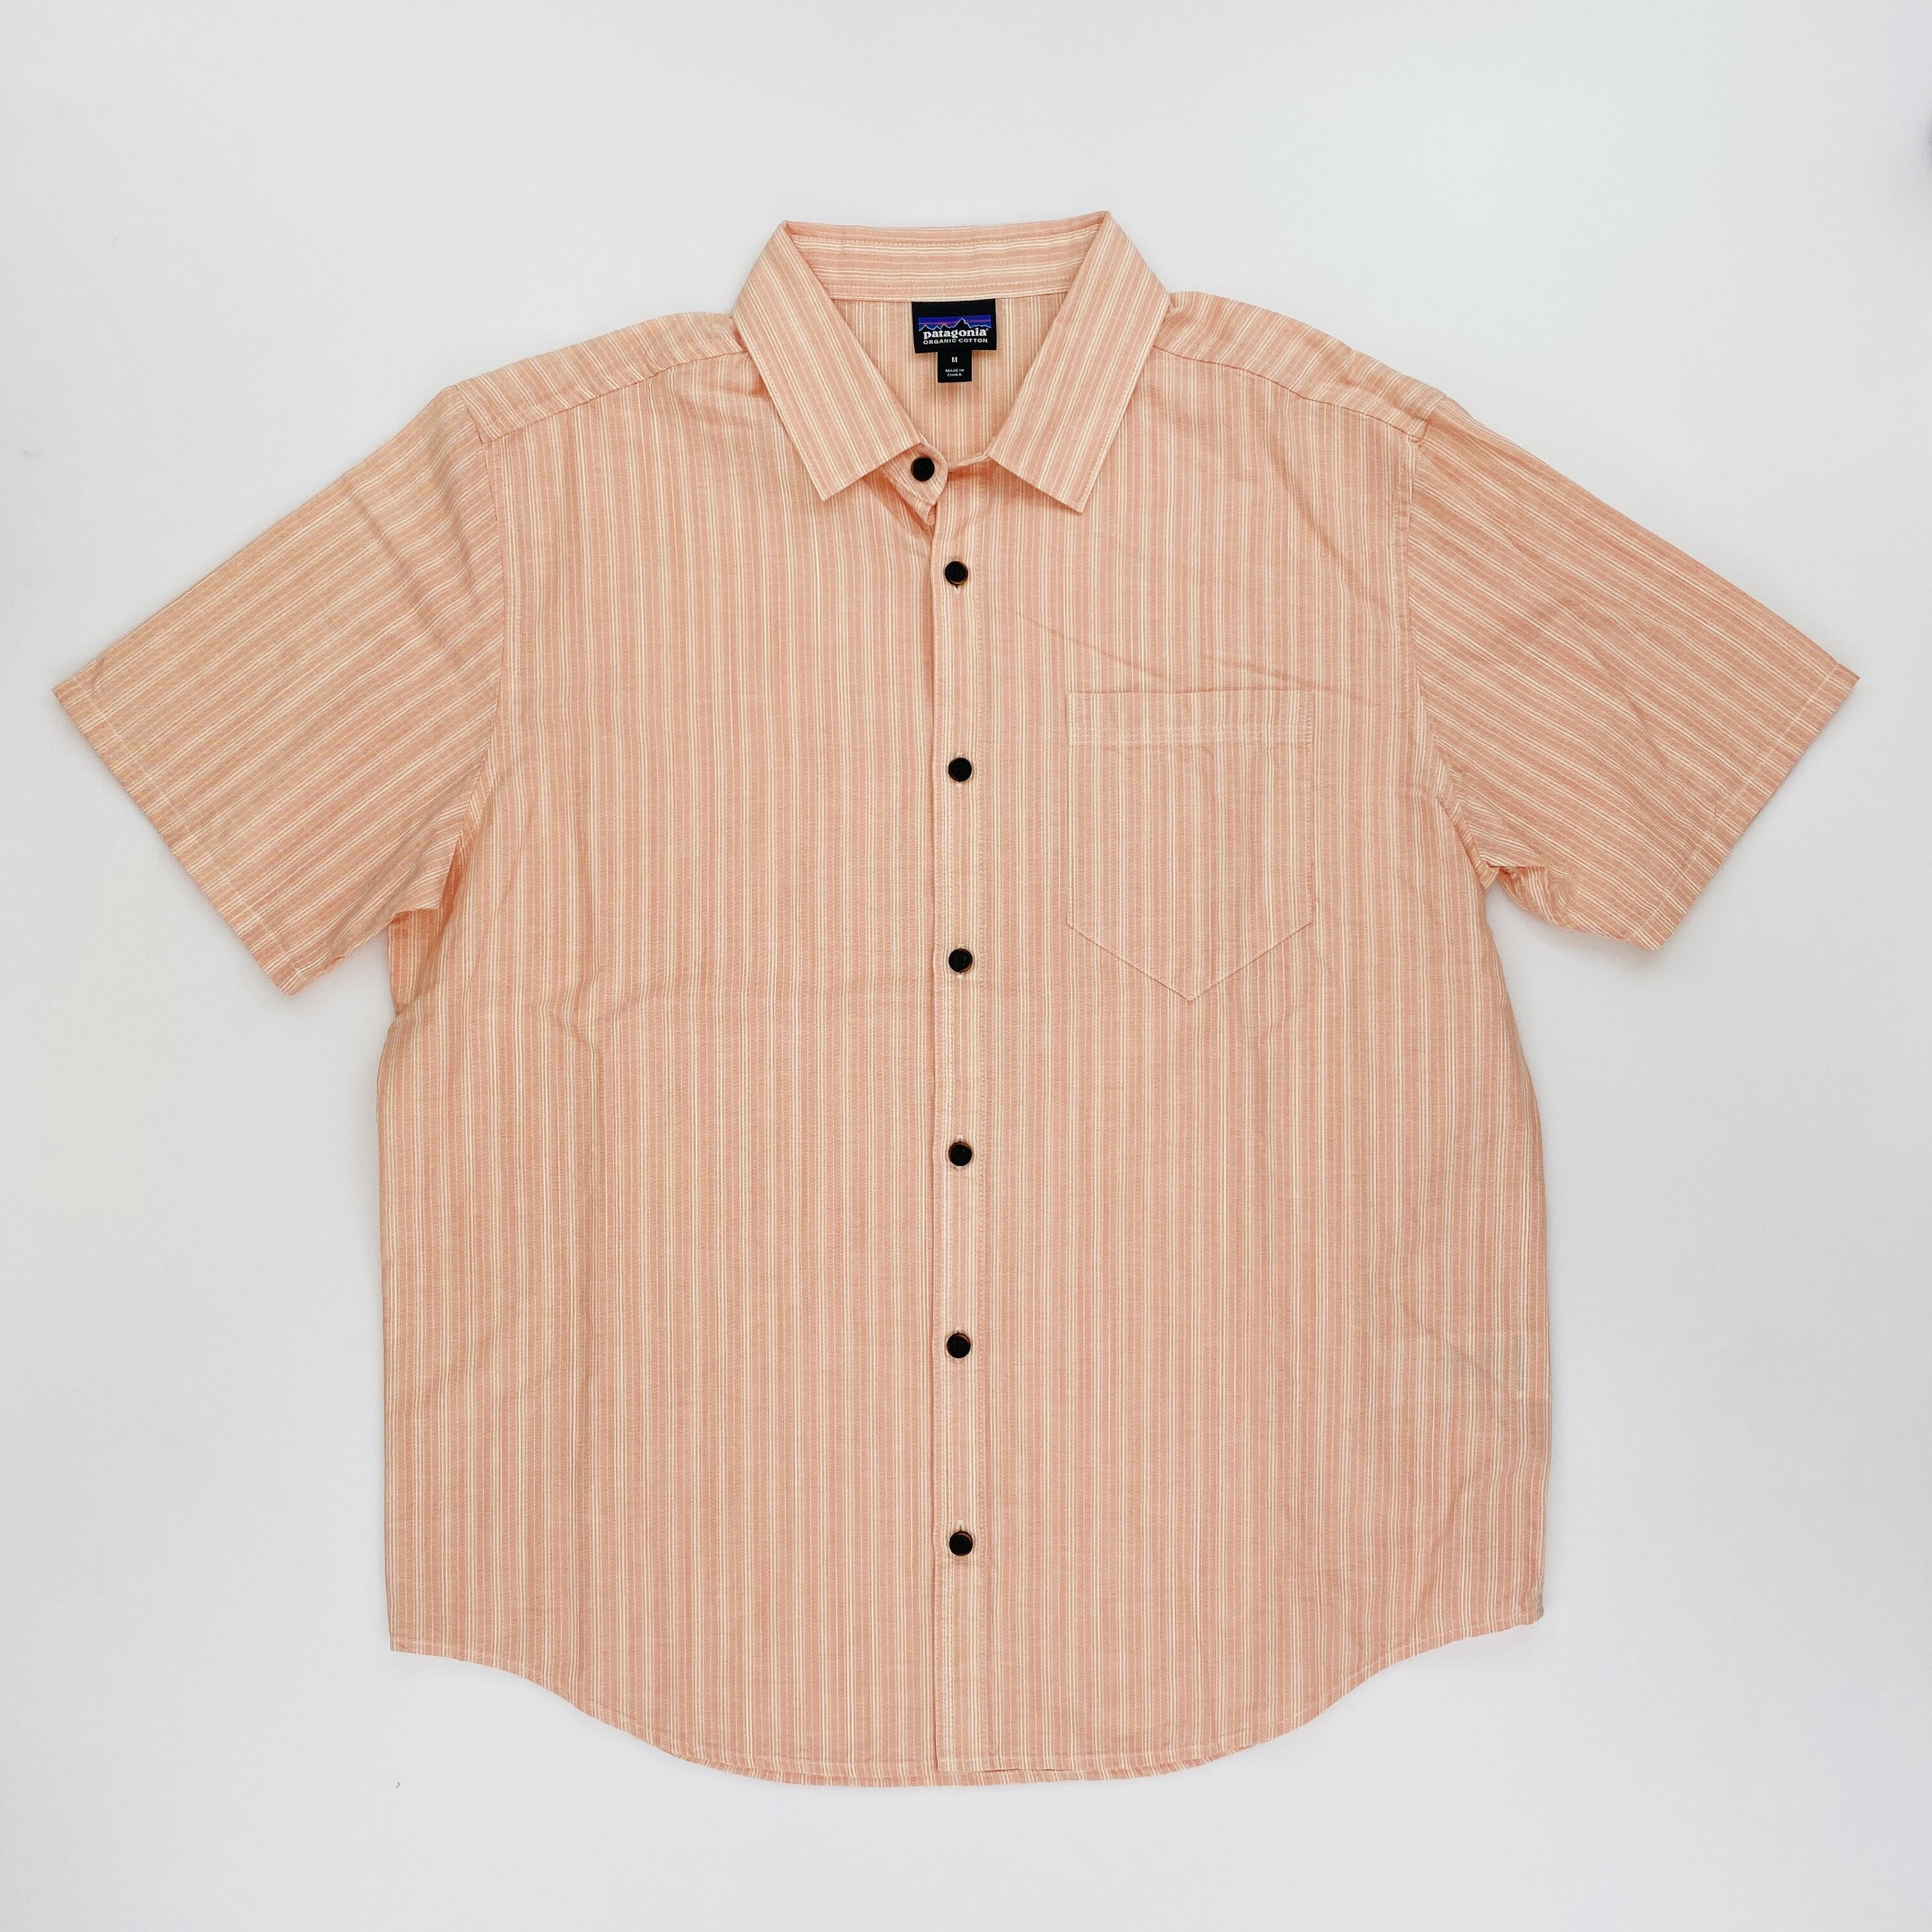 Patagonia M's Organic Cotton Slub Poplin Shirt - Second Hand Pánská košile - oranžový - M | Hardloop